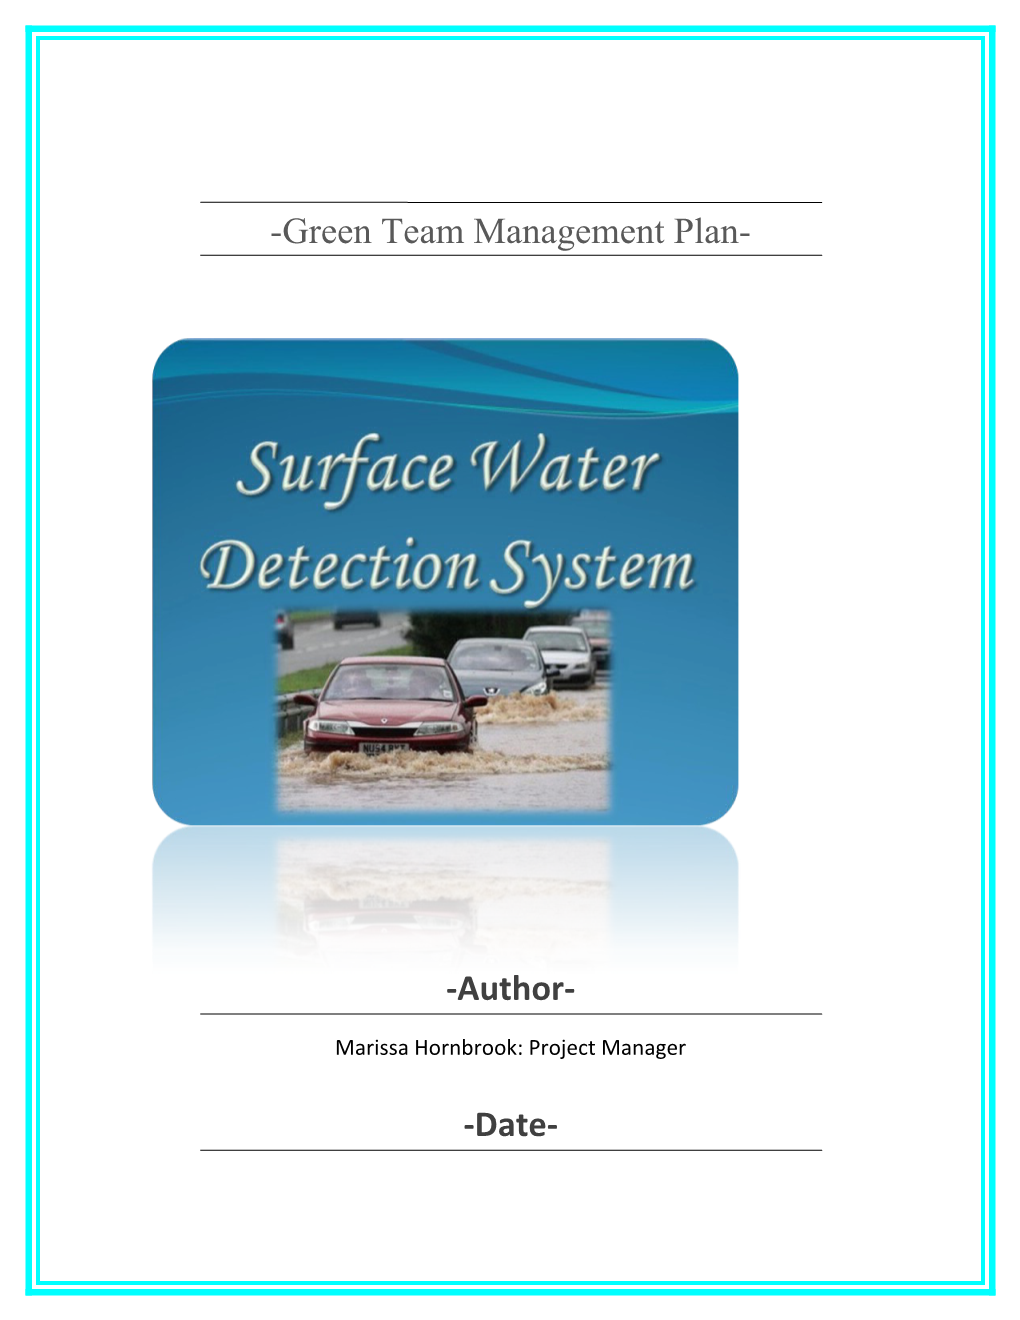 SWDS - Green Team Management Plan 12/10/2010